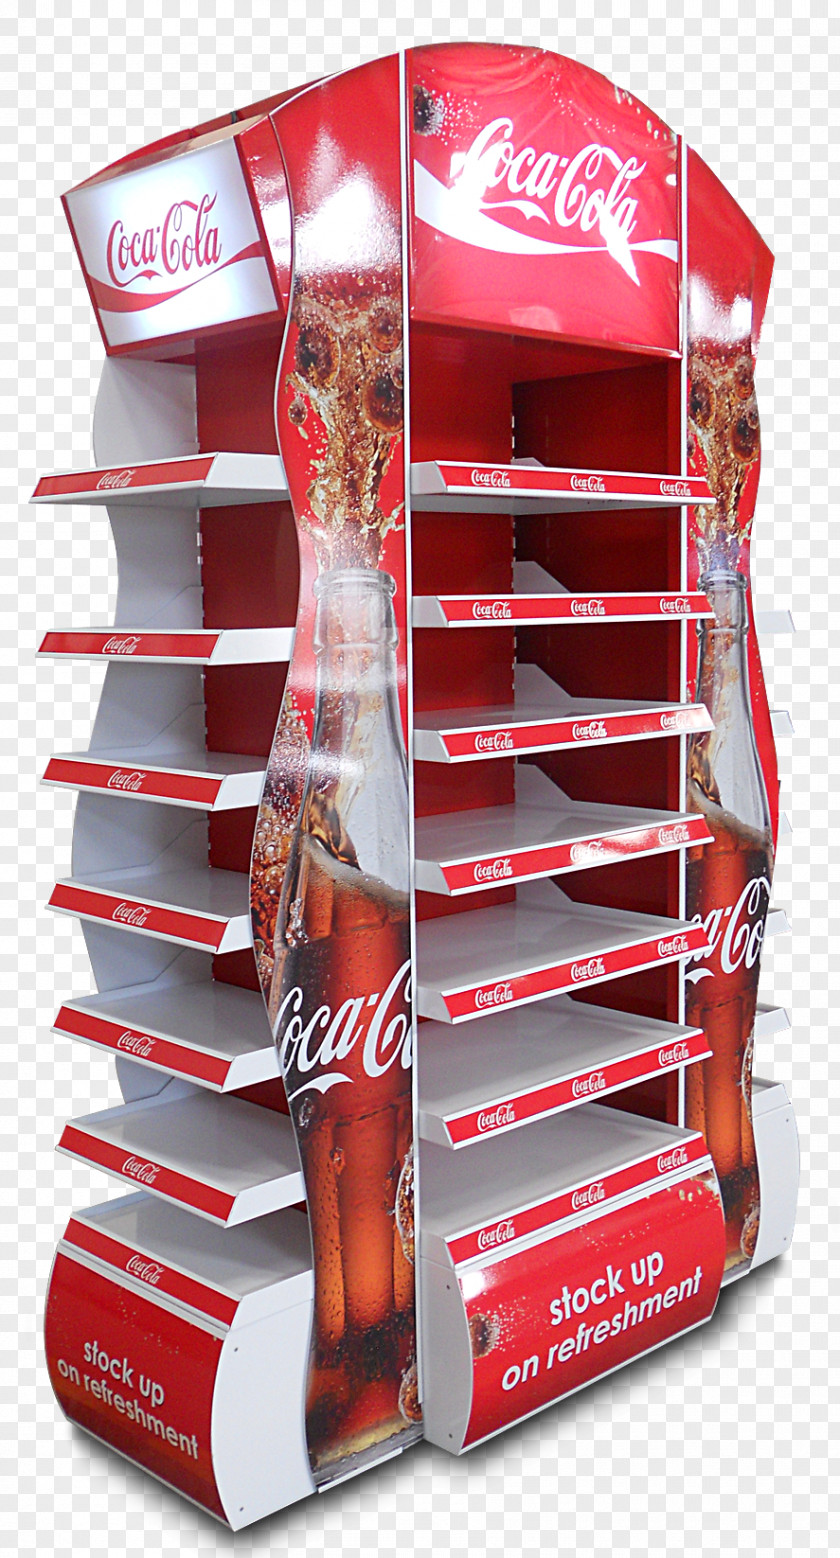 Exhibition Stand Design The Coca-Cola Company PNG